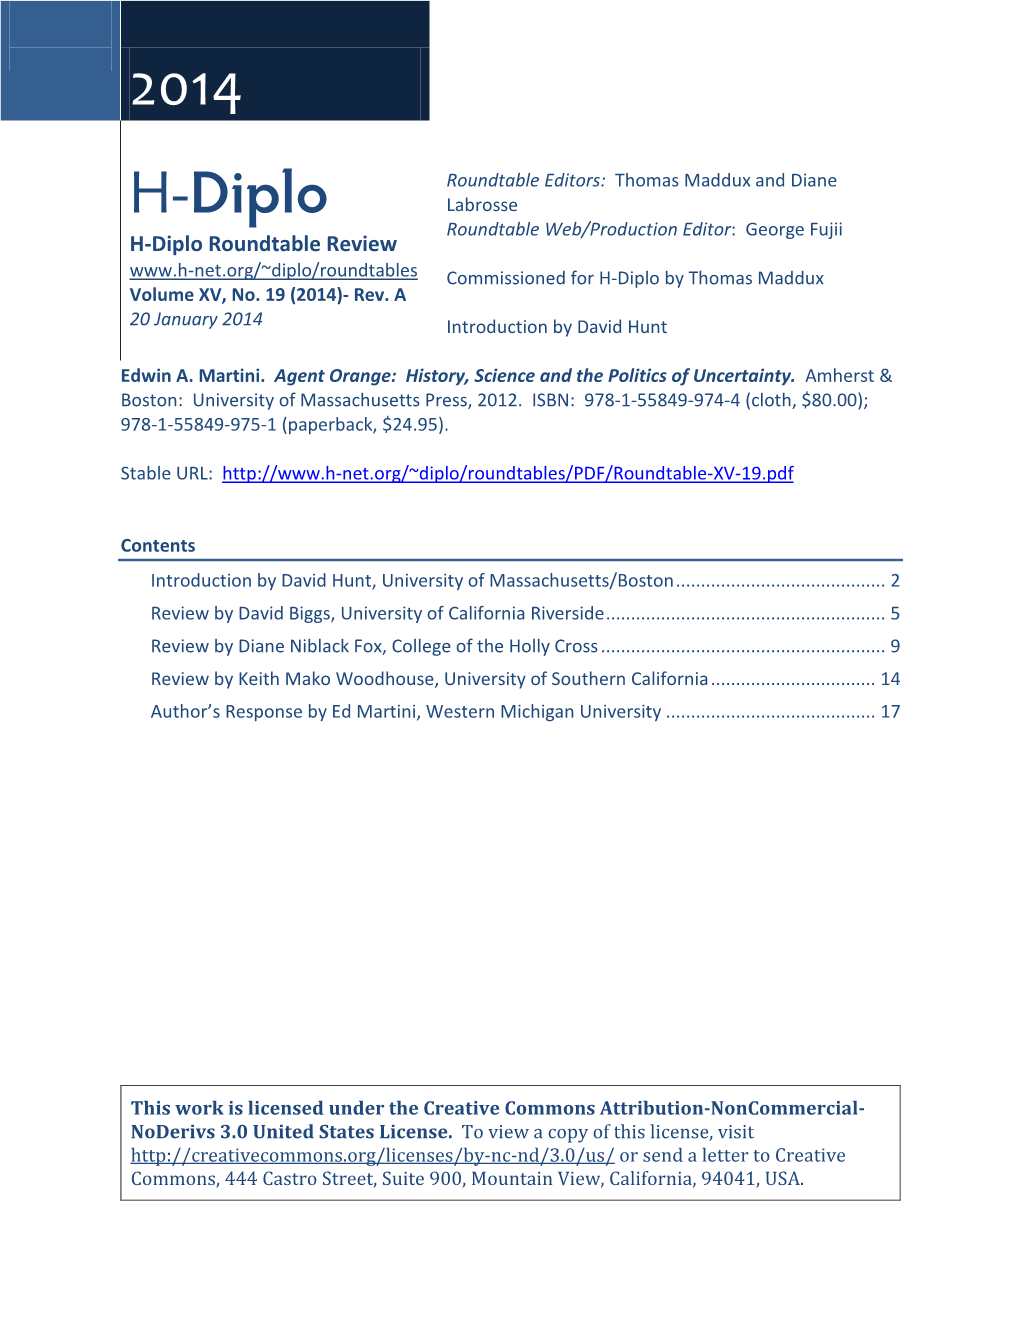 H-Diplo Roundtable, Vol. XV, No. 19